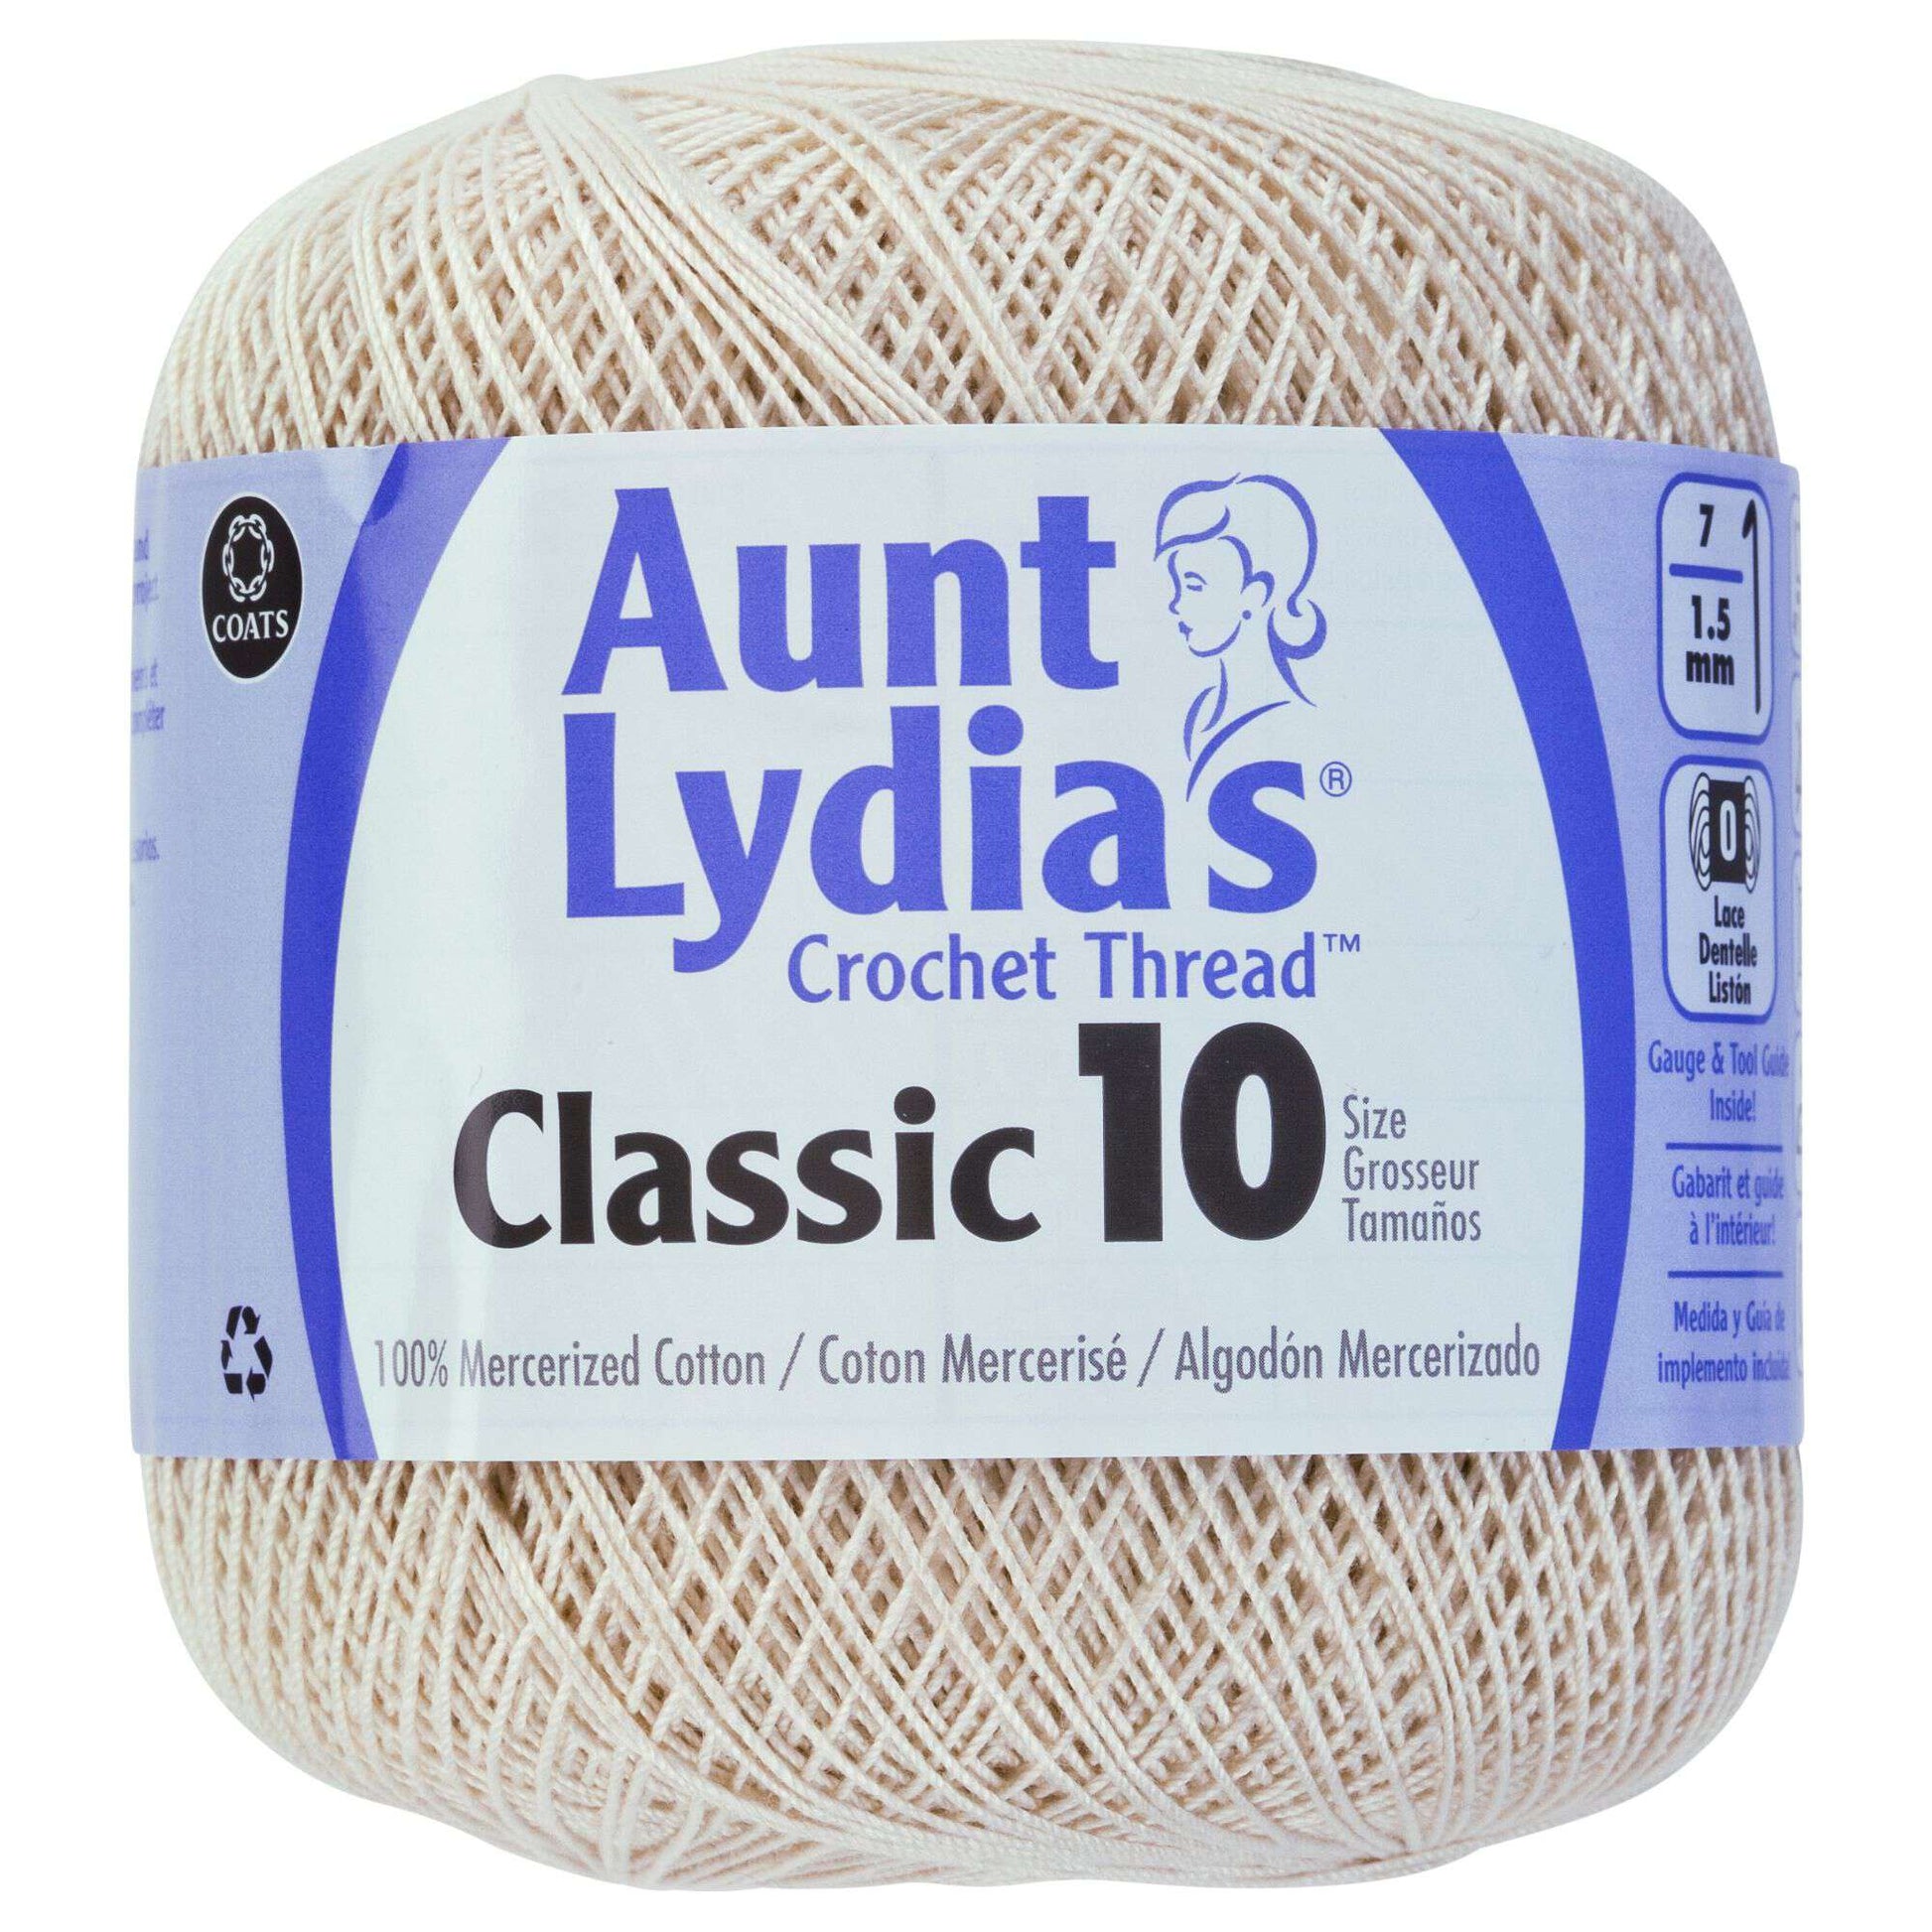 Aunt Lydia's Classic Crochet Thread Size 10 - Clearance shades Ecru